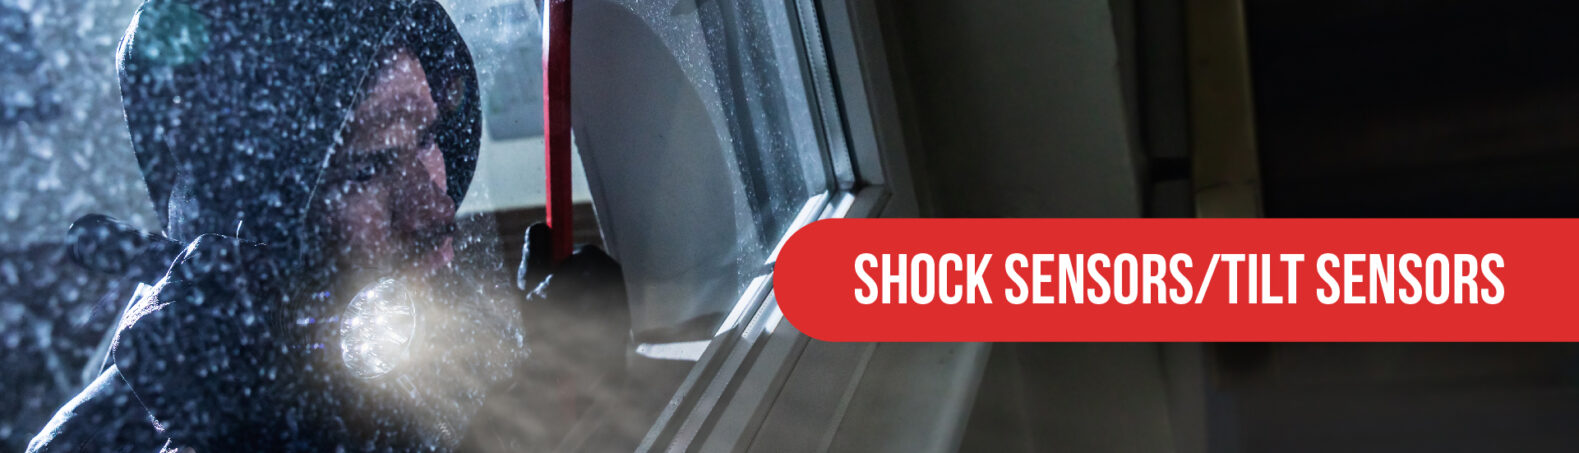 Tilt sensors or shock sensors can help determine if someone has tried to unlawfully open your garage door